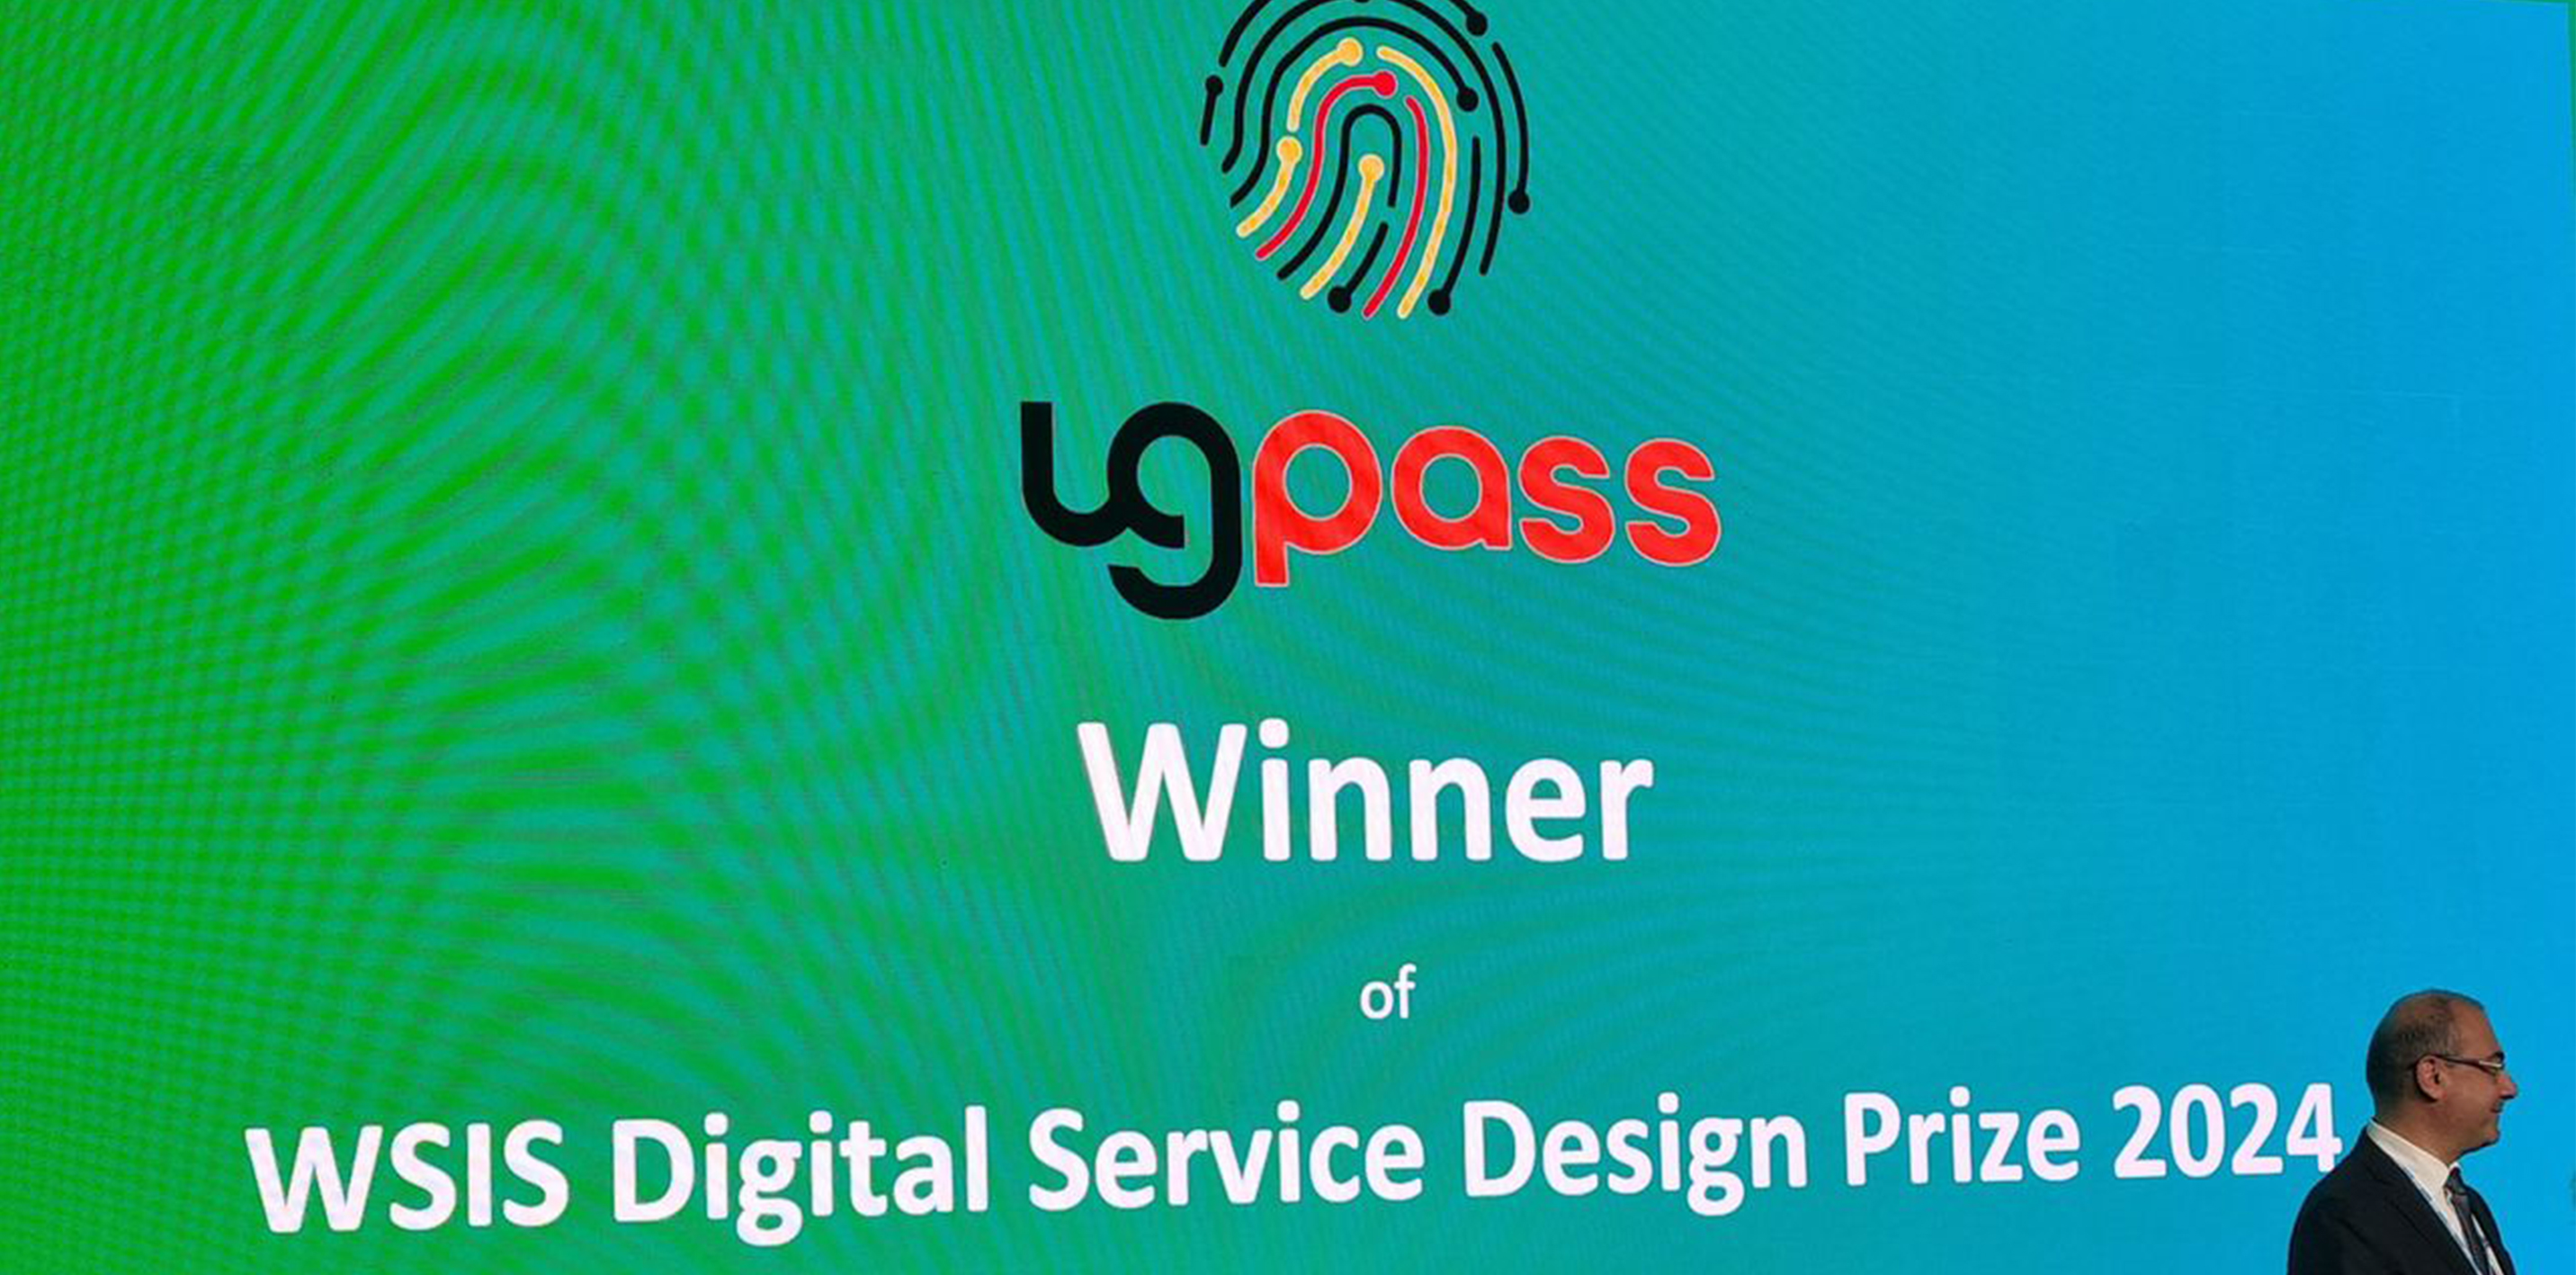 NITA-U's UGPass wins the prestigious WSIS Design Award for 2024